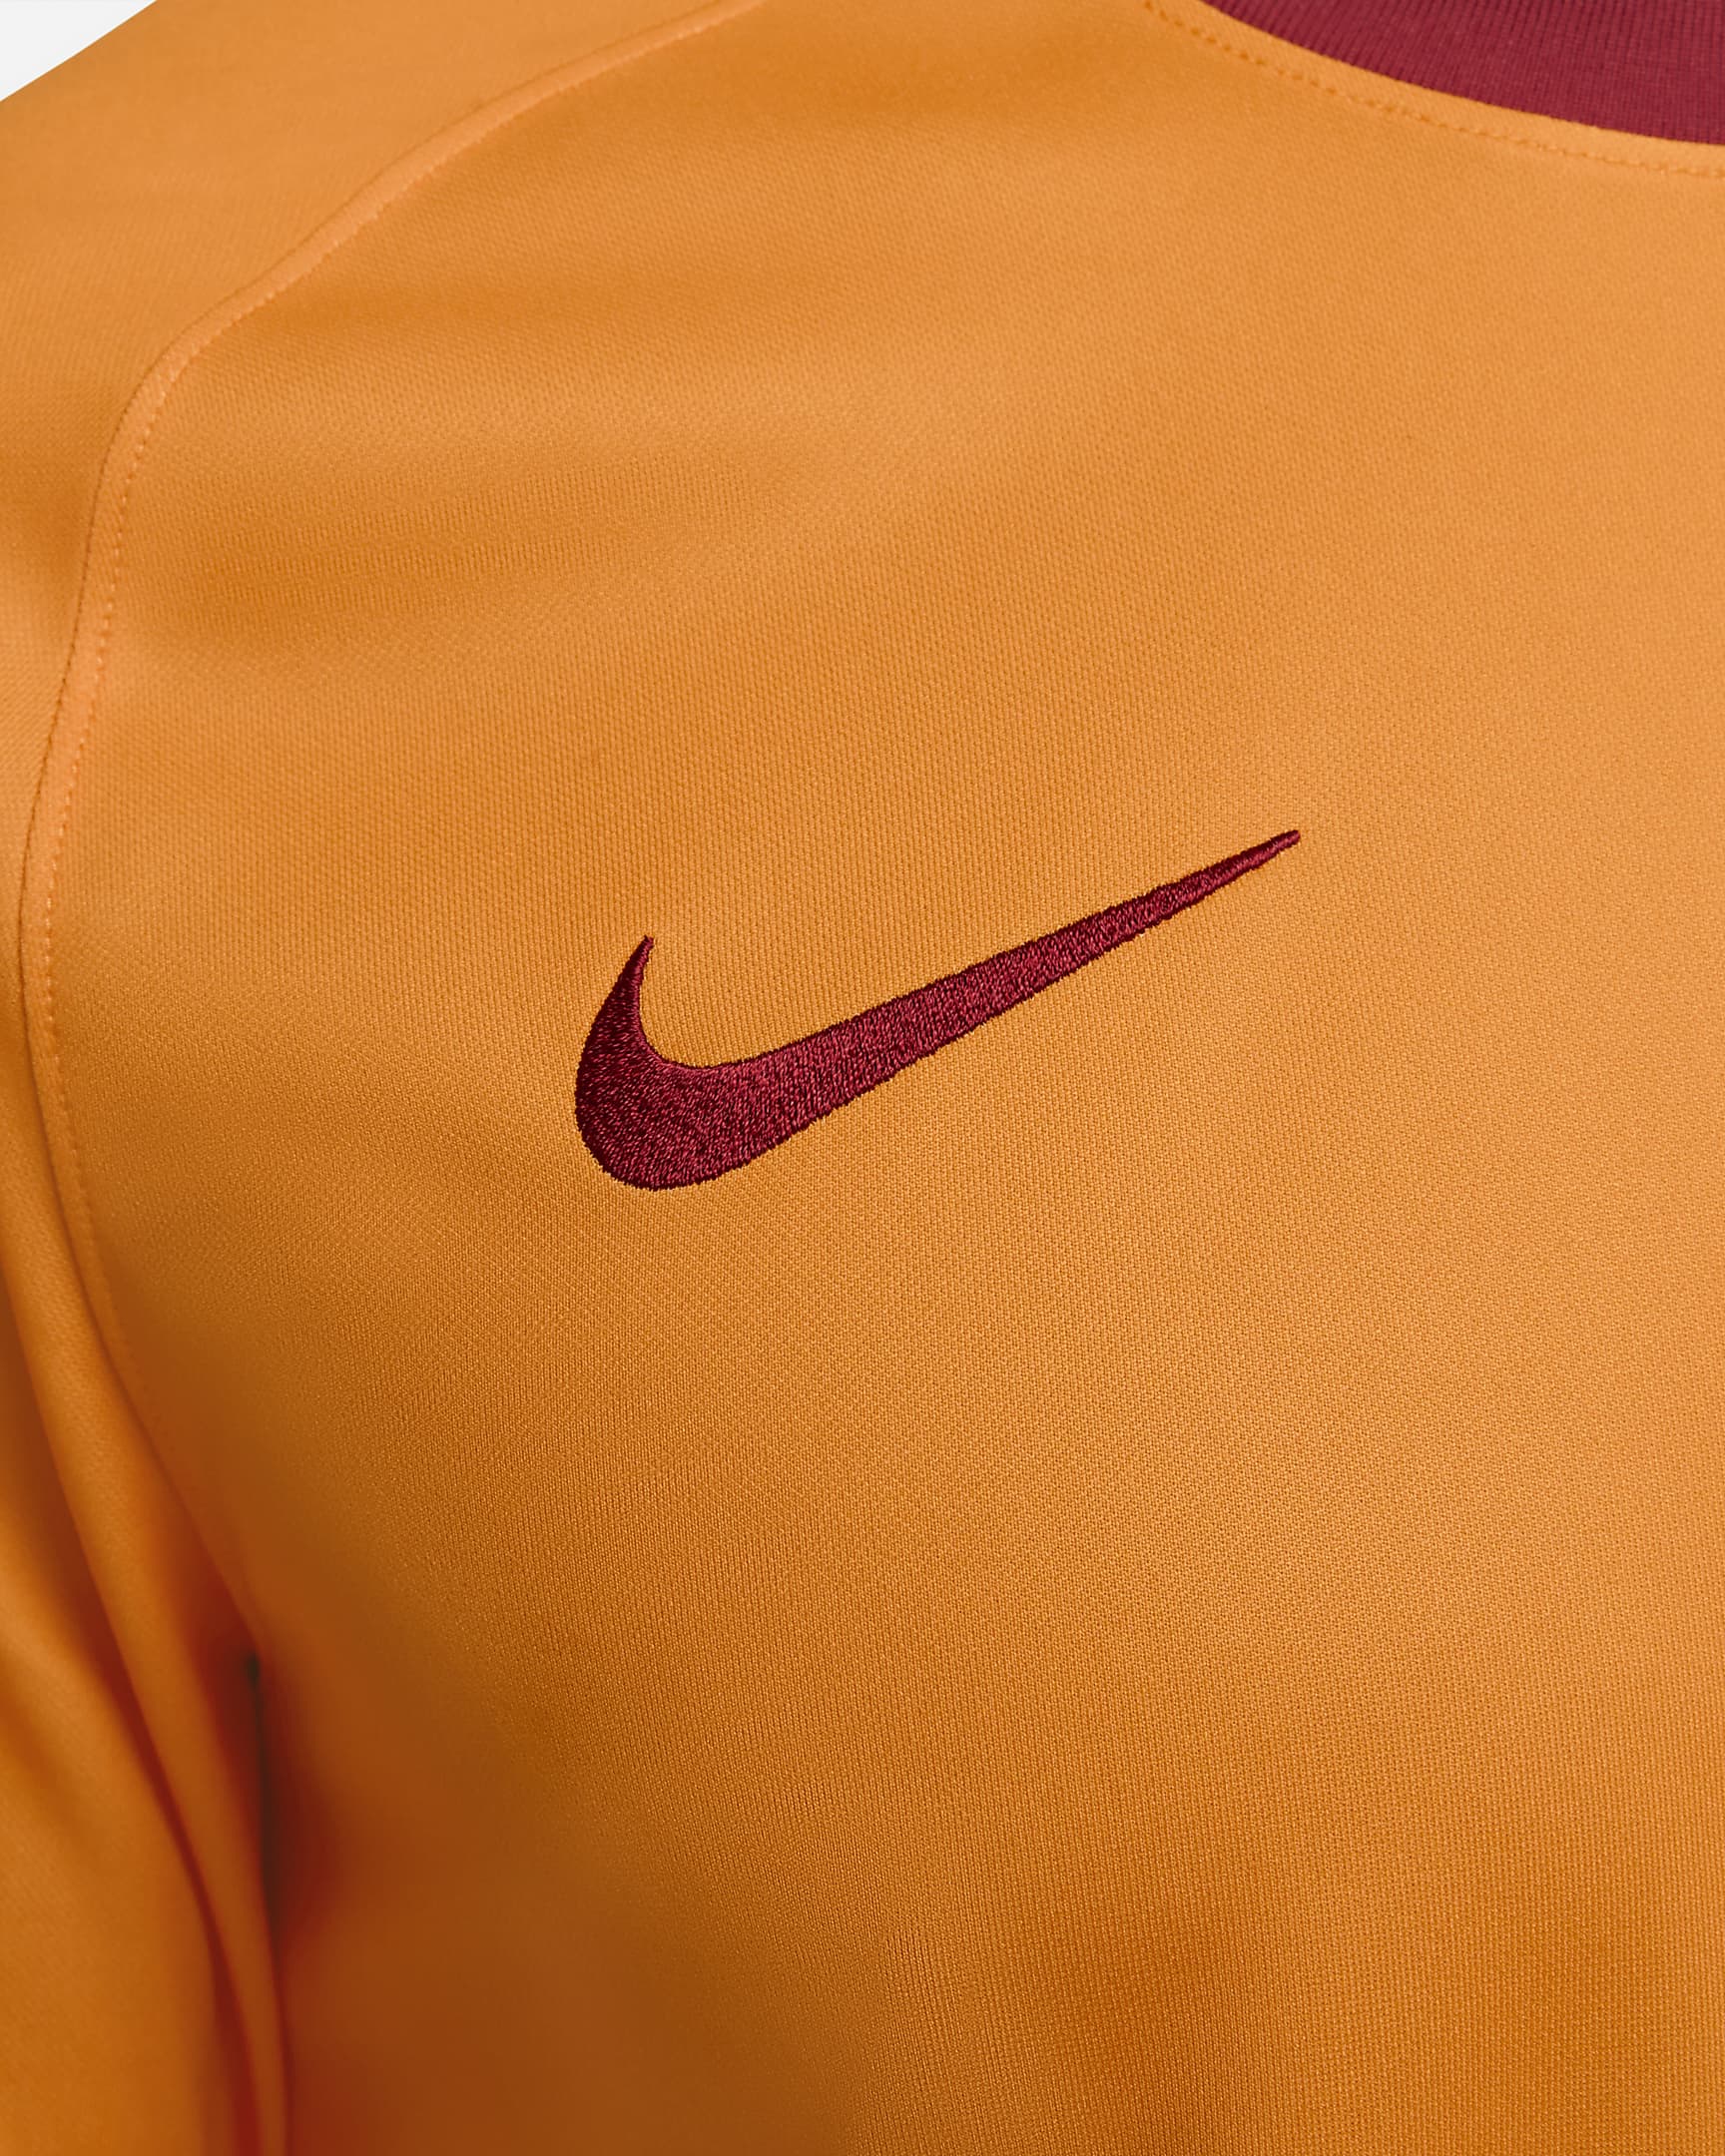 Galatasaray 2023/24 Home Men's Nike Dri-FIT Short-Sleeve Football Top ...